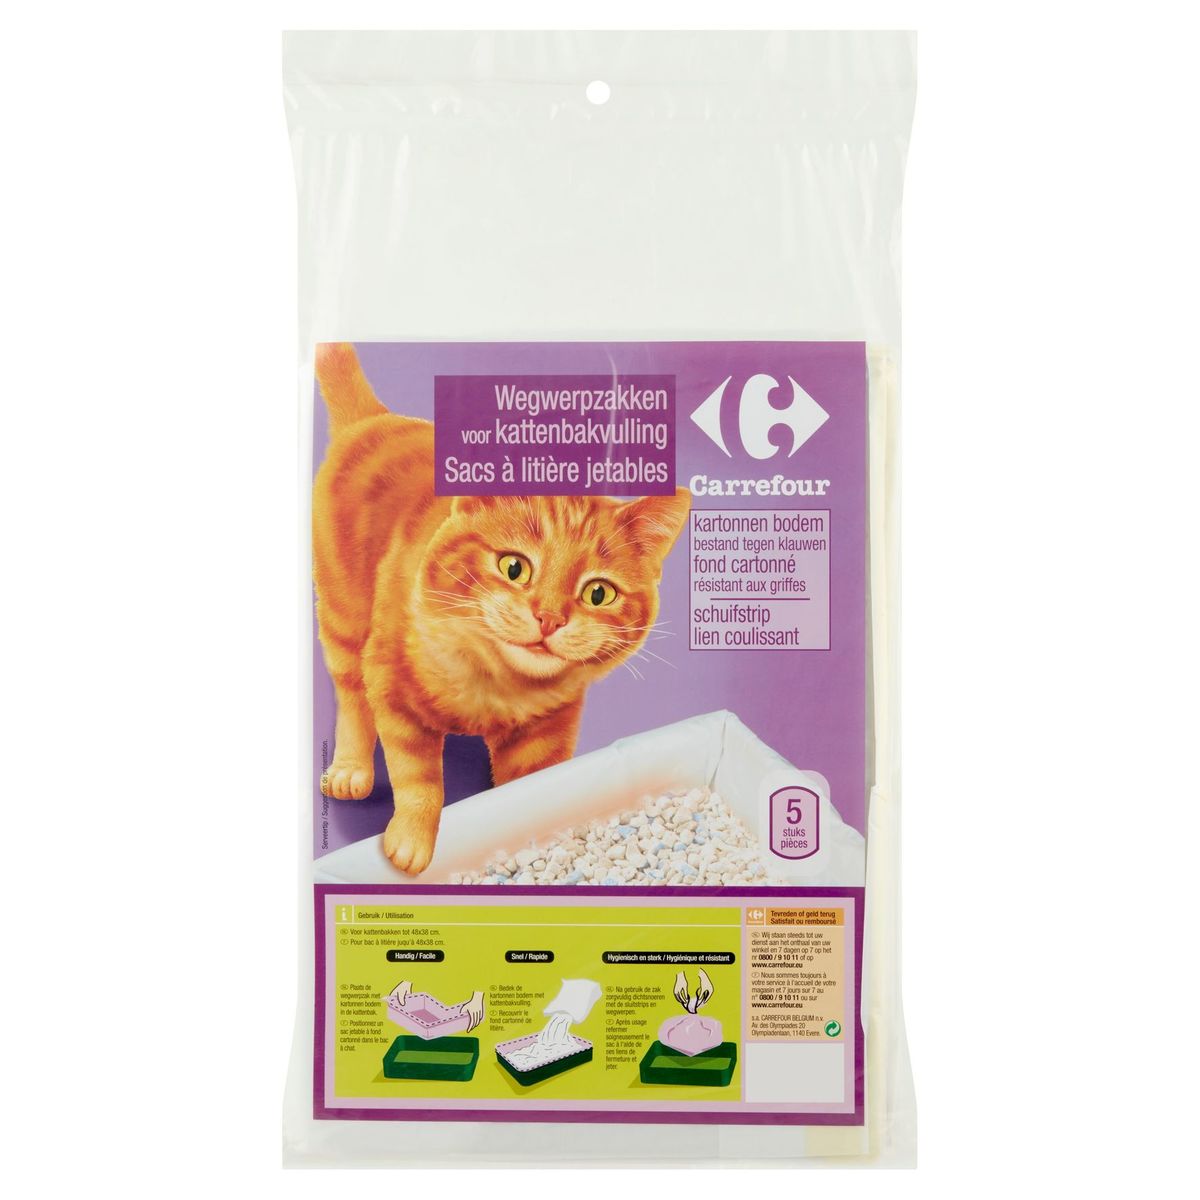 Carrefour Wegwerpzakken voor Kattenbakvulling 5 Stuks